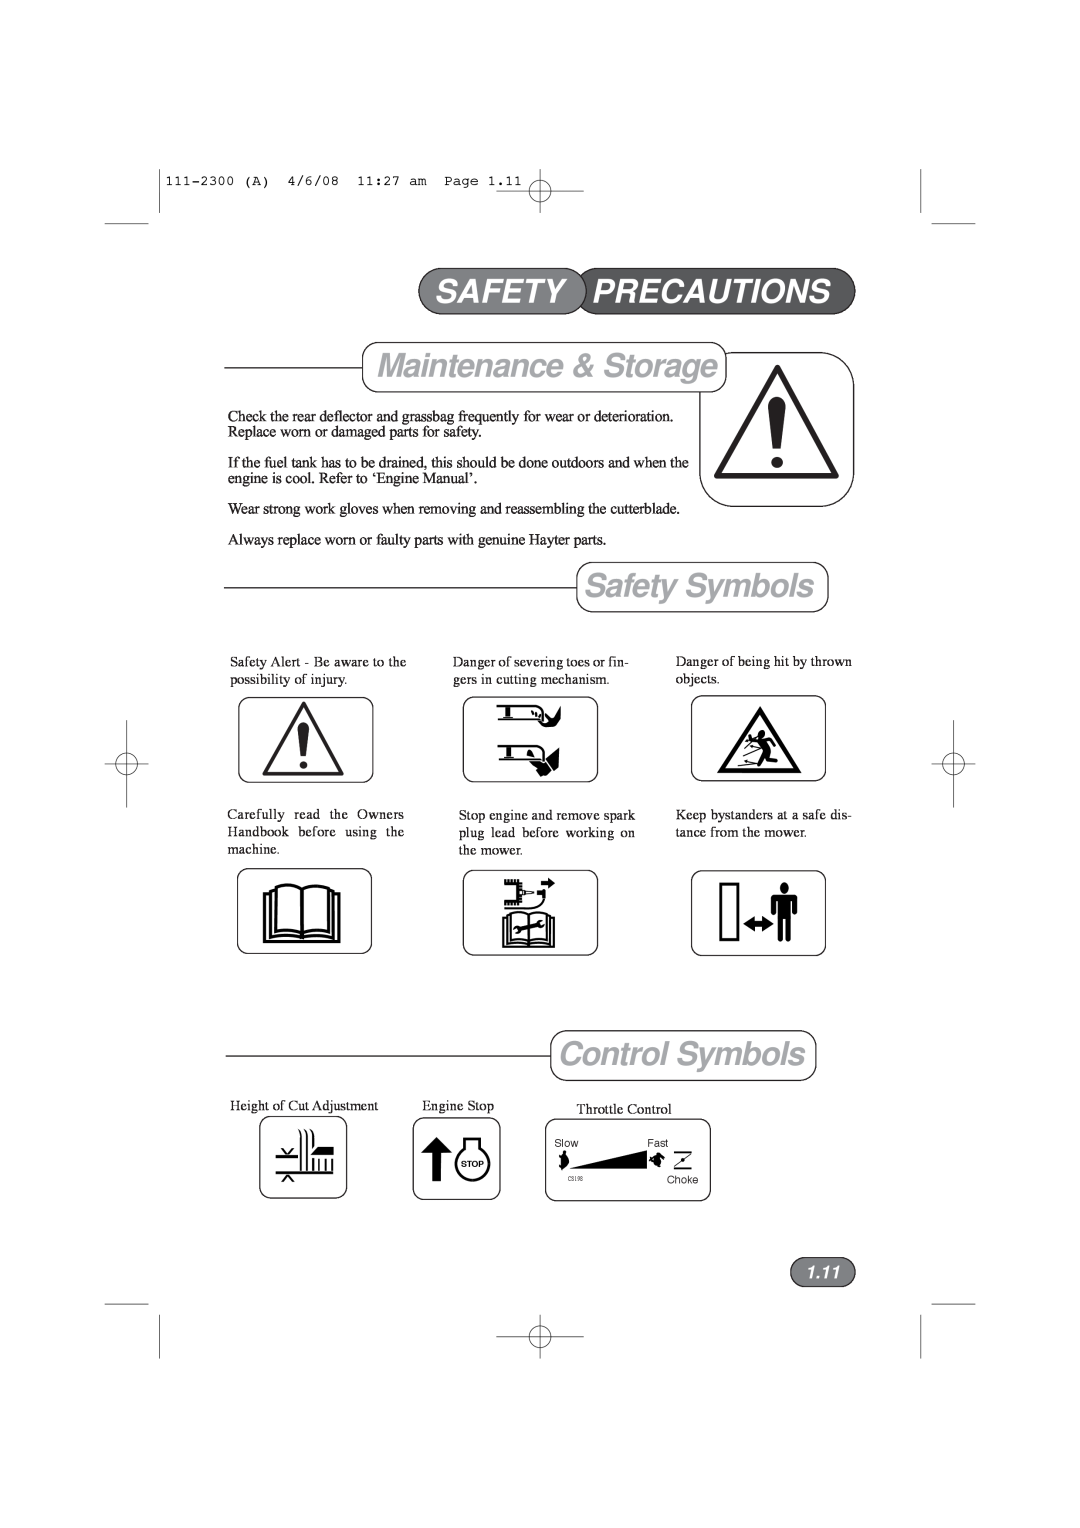 Hayter Mowers 43F manual Safety Symbols, Control Symbols, 1.11, Safety Precautions, Maintenance & Storage 